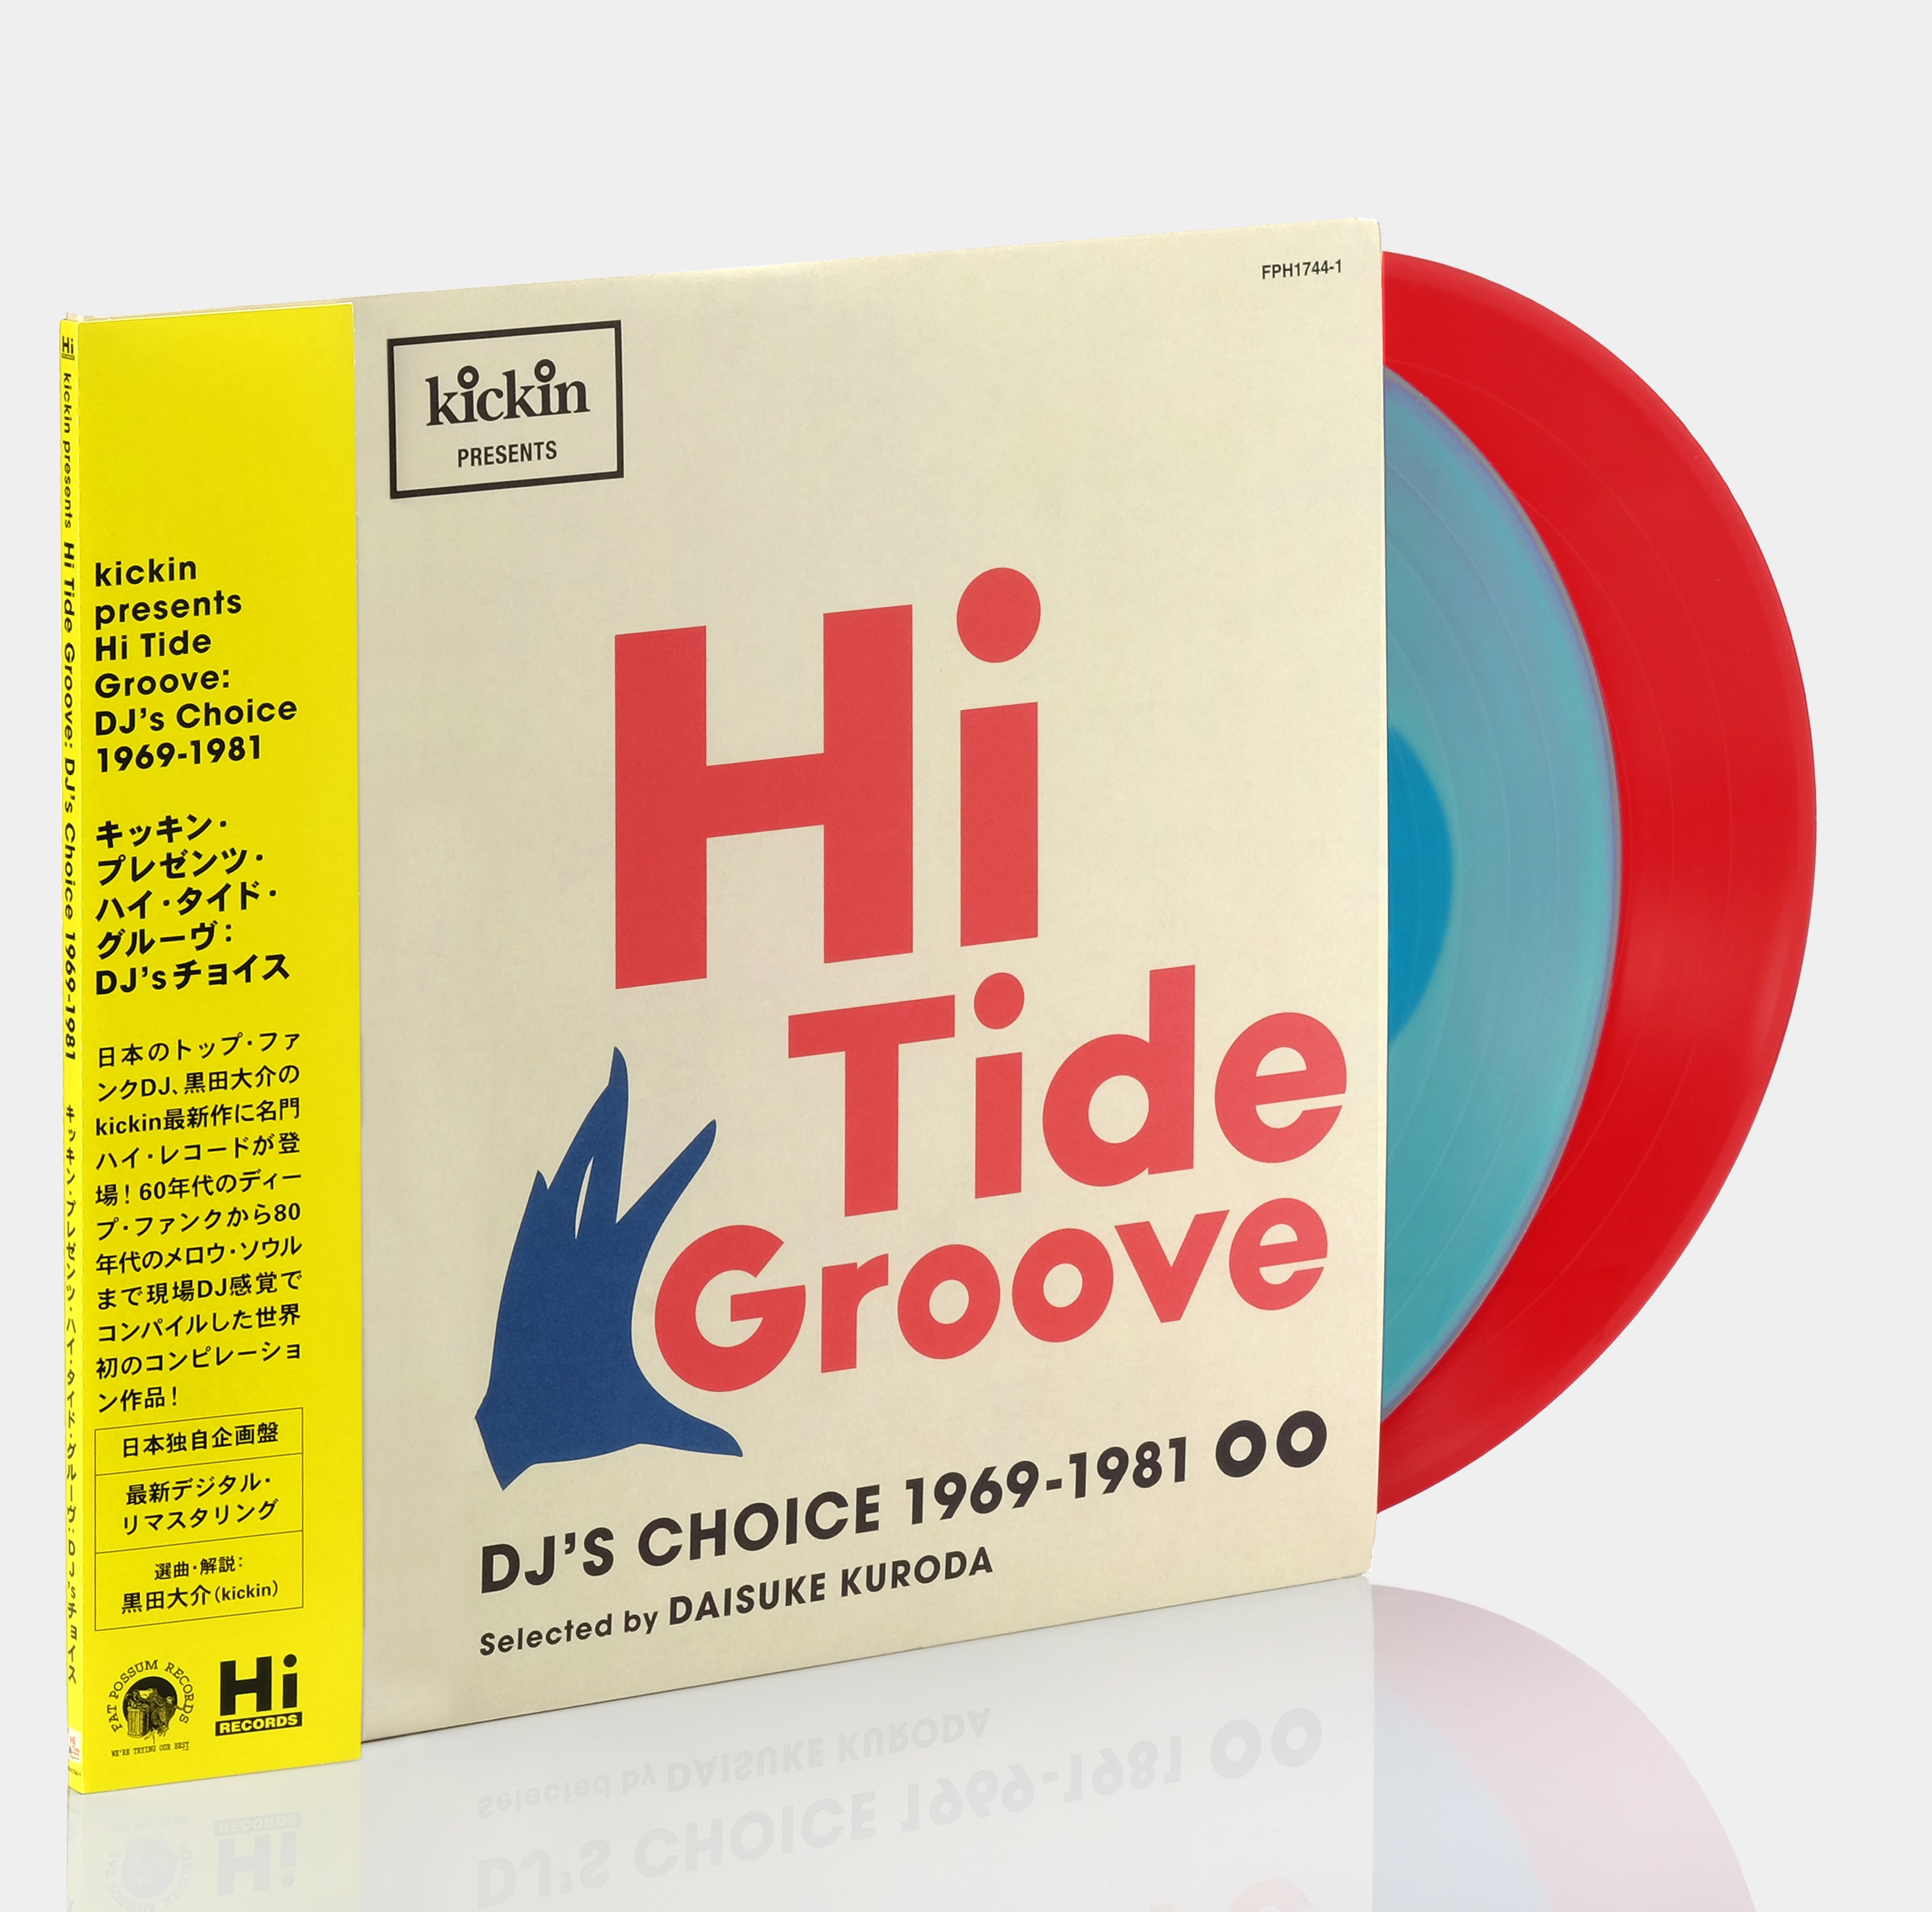 Kickin Presents Hi Tide Groove (DJ's Choice 1969-1981) 2xLP Red & Blue Vinyl Record